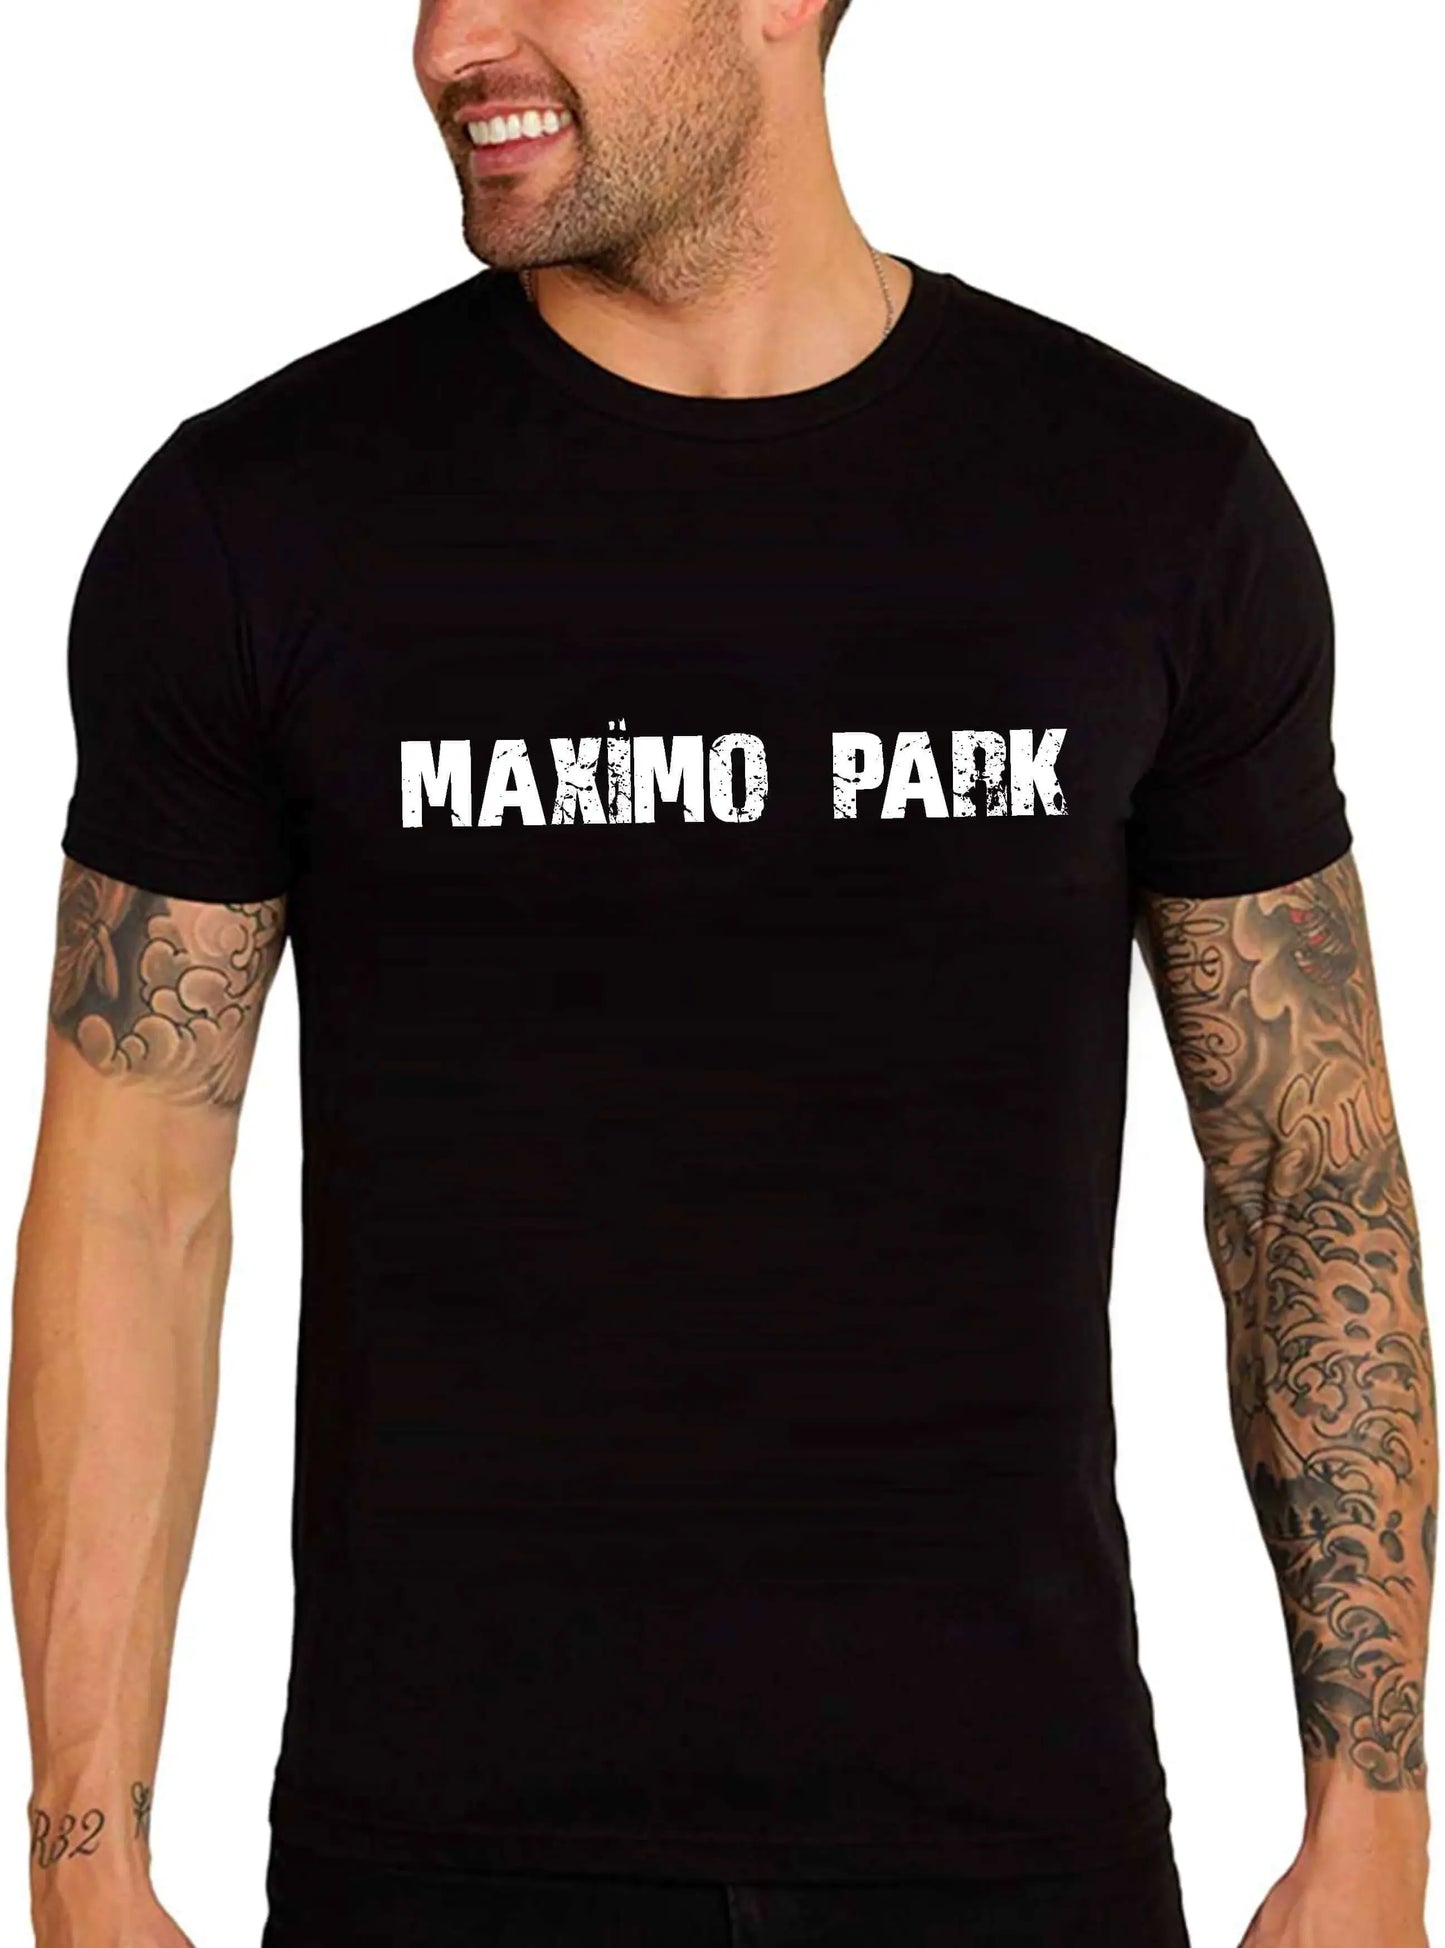 Men's Graphic T-Shirt Maxïmo Park Eco-Friendly Limited Edition Short Sleeve Tee-Shirt Vintage Birthday Gift Novelty